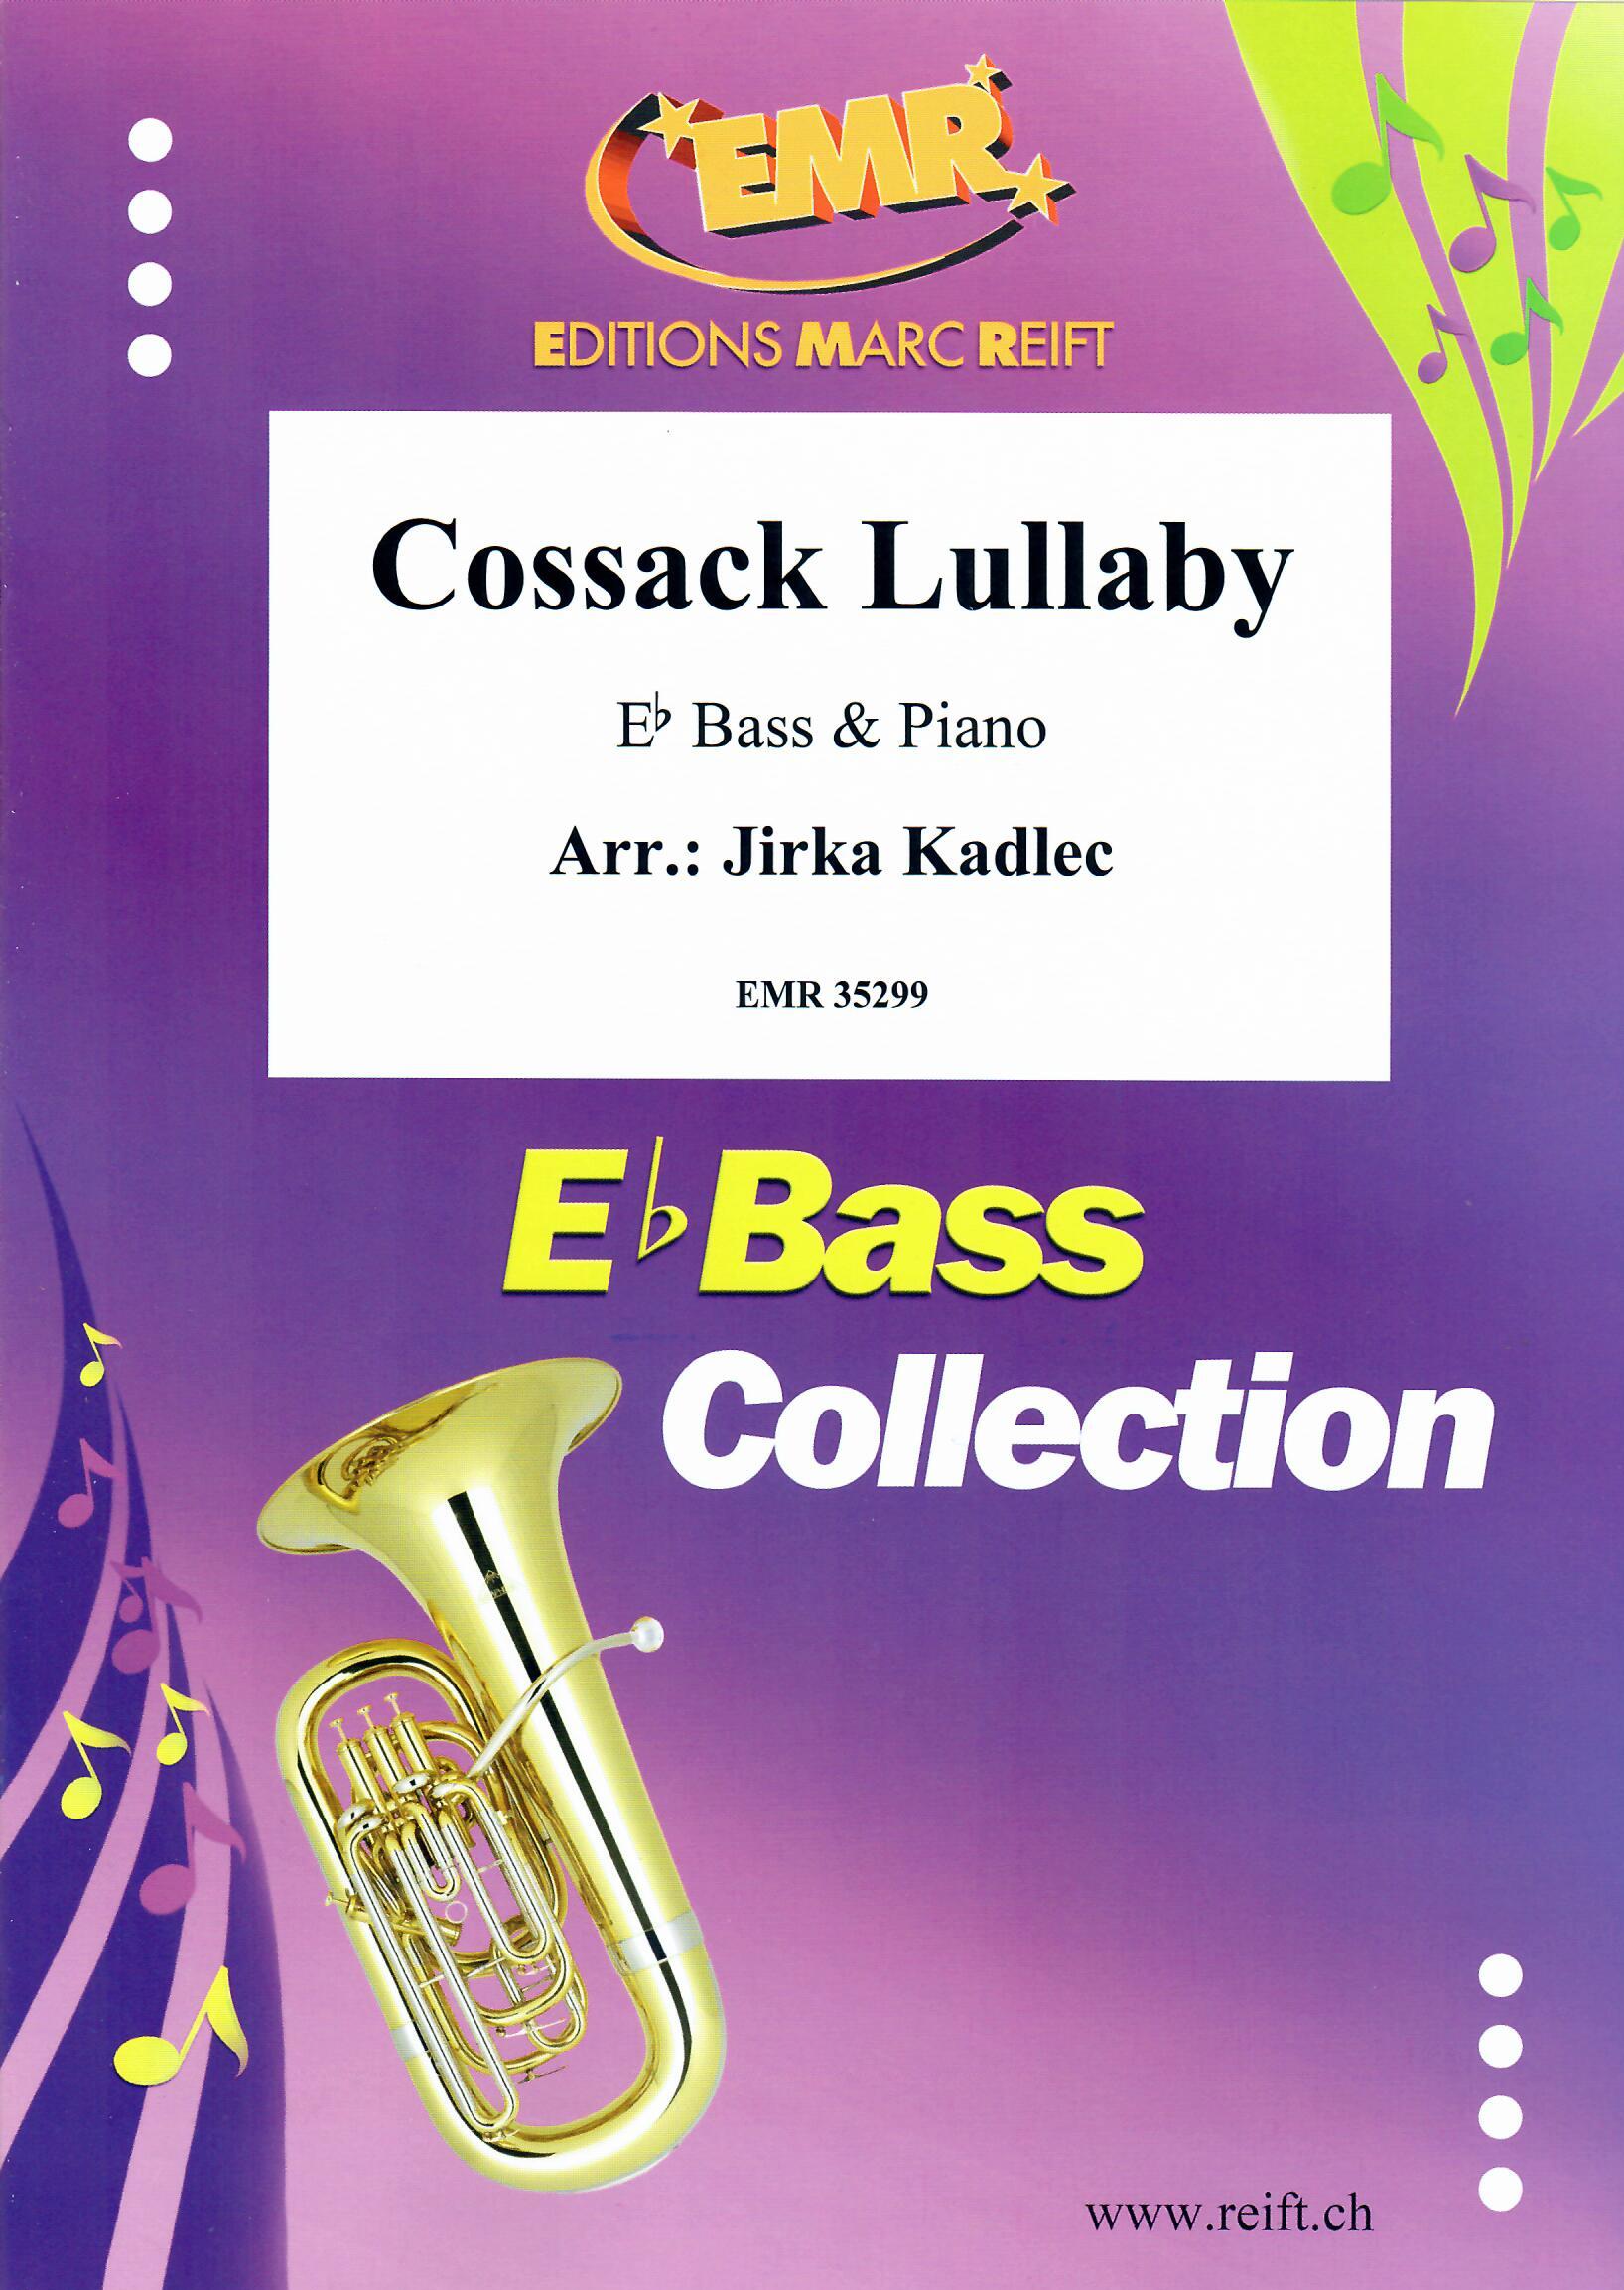 COSSACK LULLABY